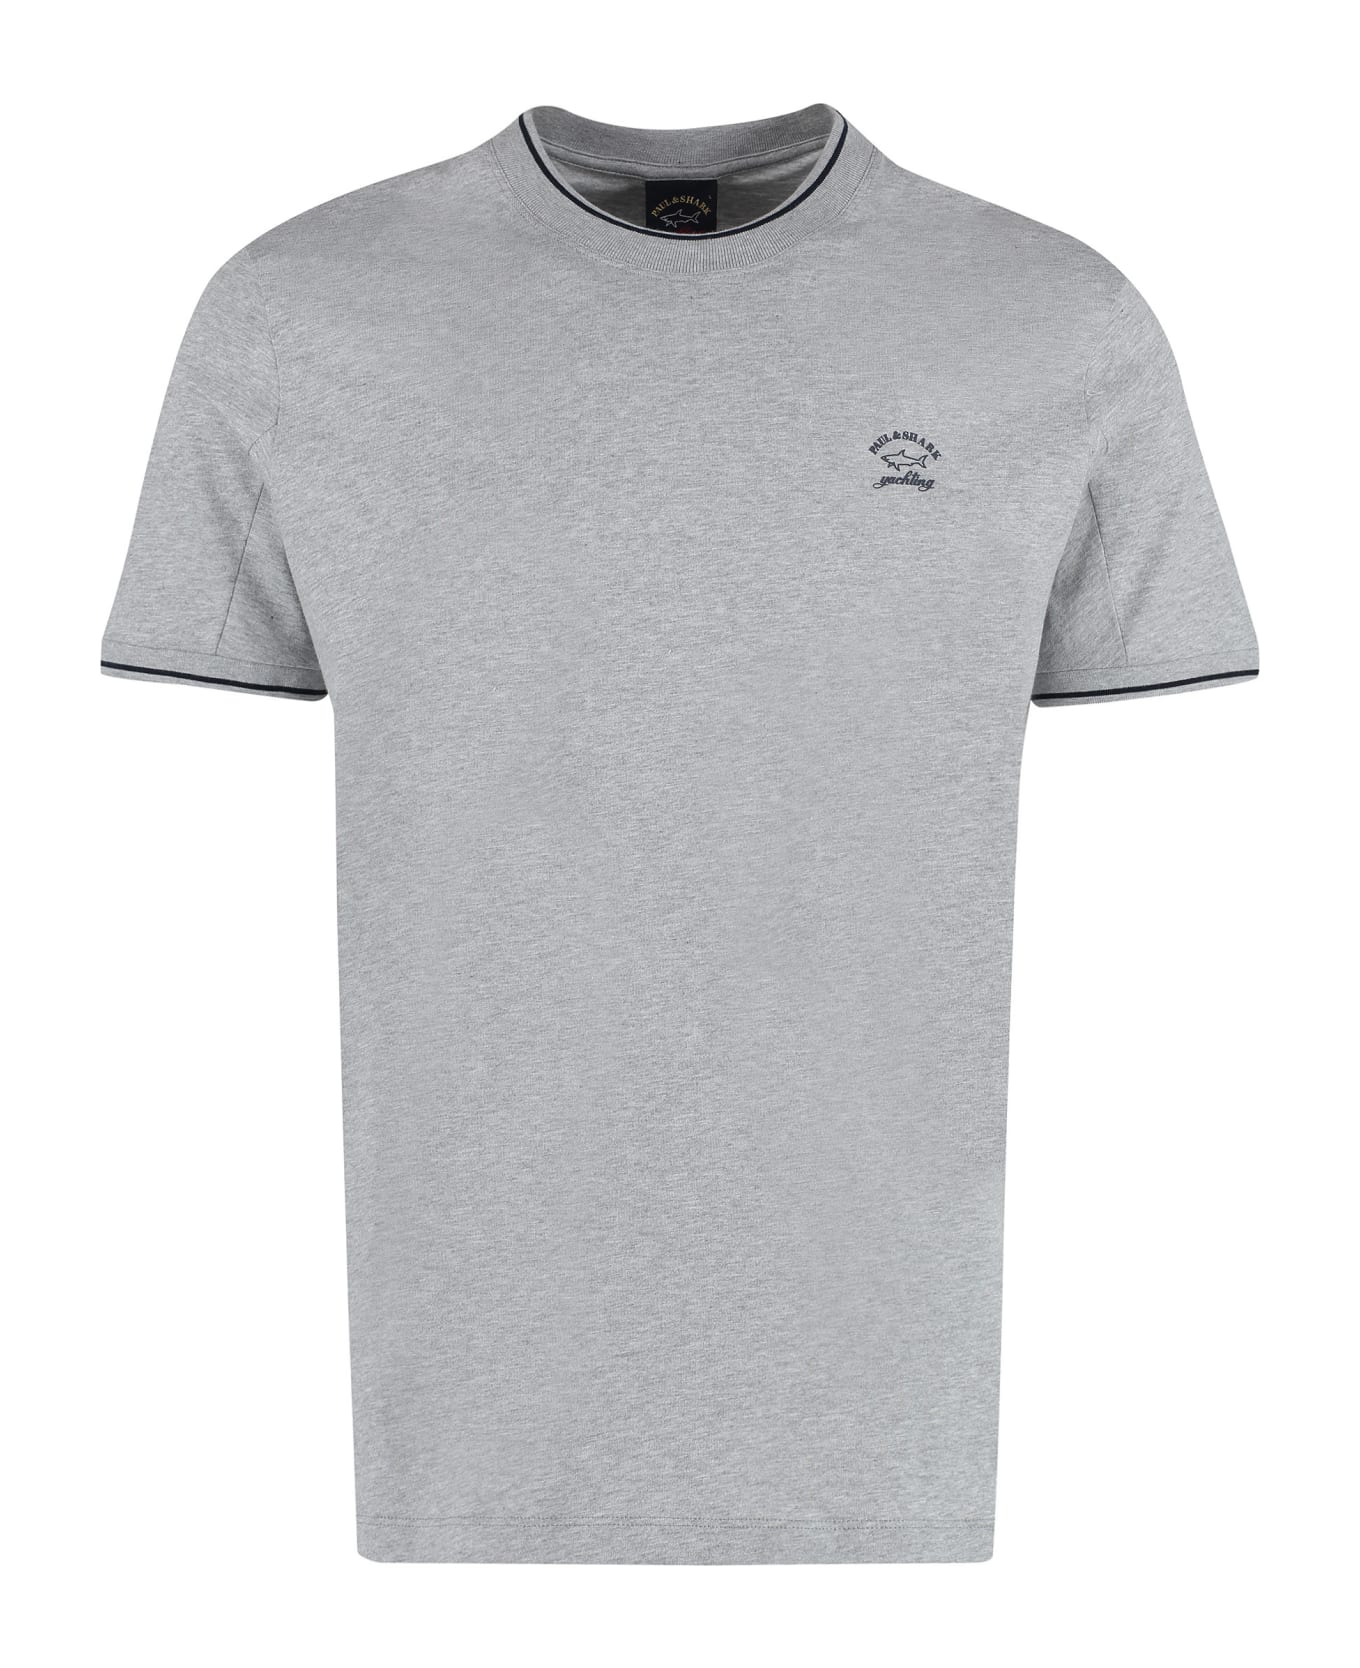 Paul&Shark Logo Cotton T-shirt - grey